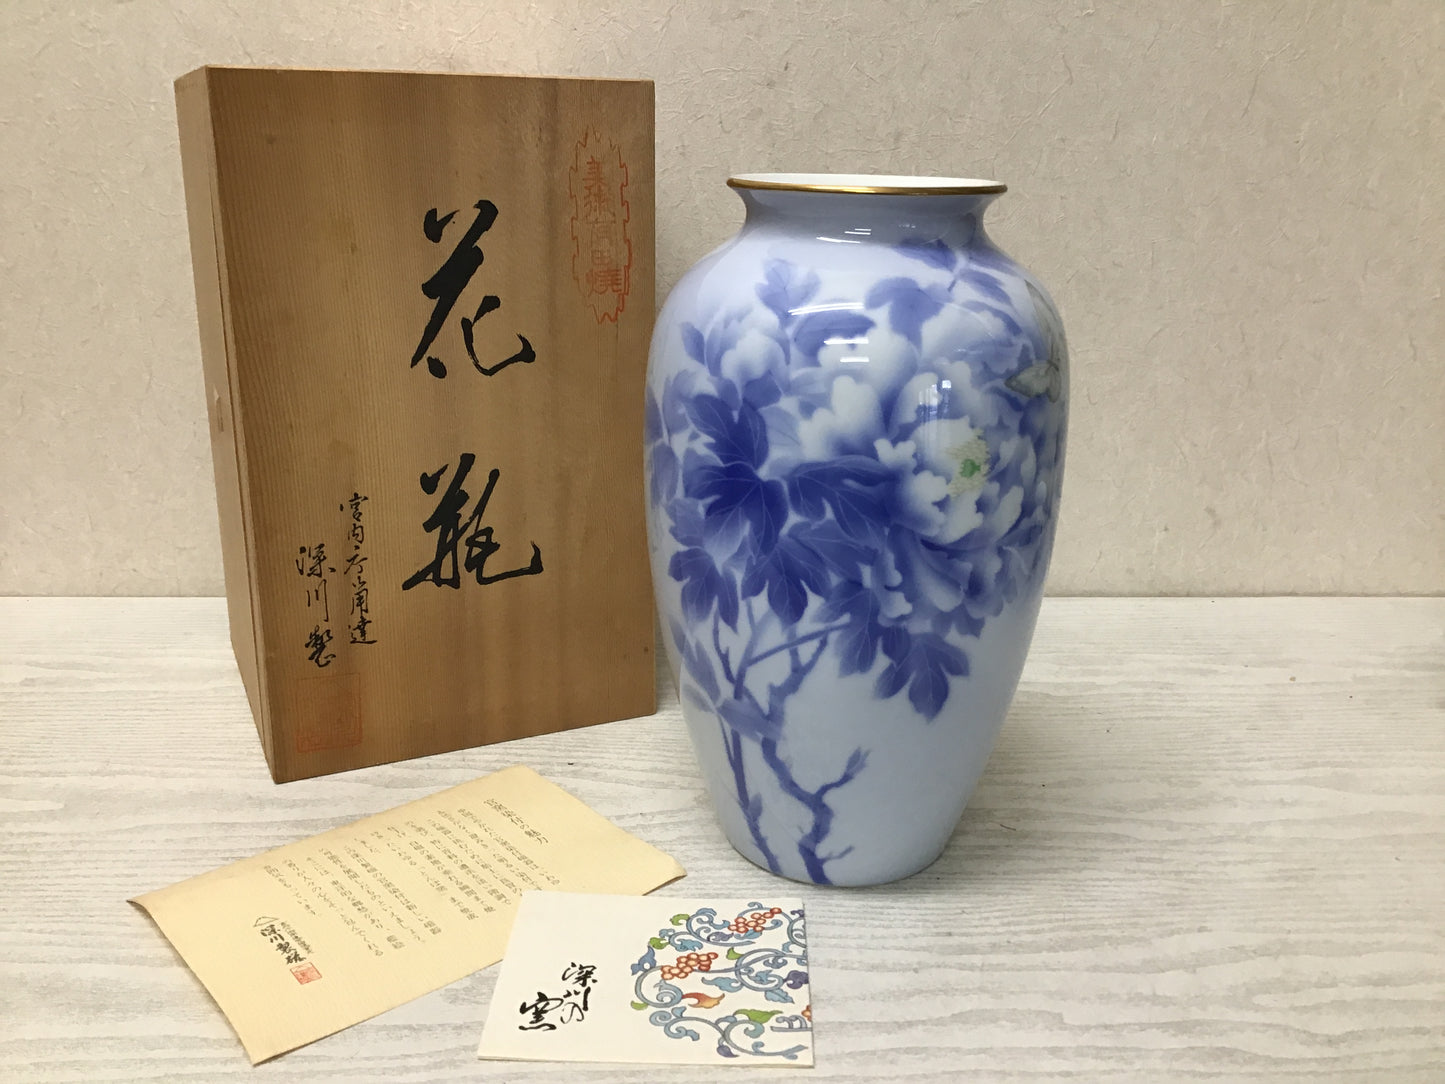 Y2427 FLOWER VASE Fukagawa signed box Japan antique ikebana home decor interior